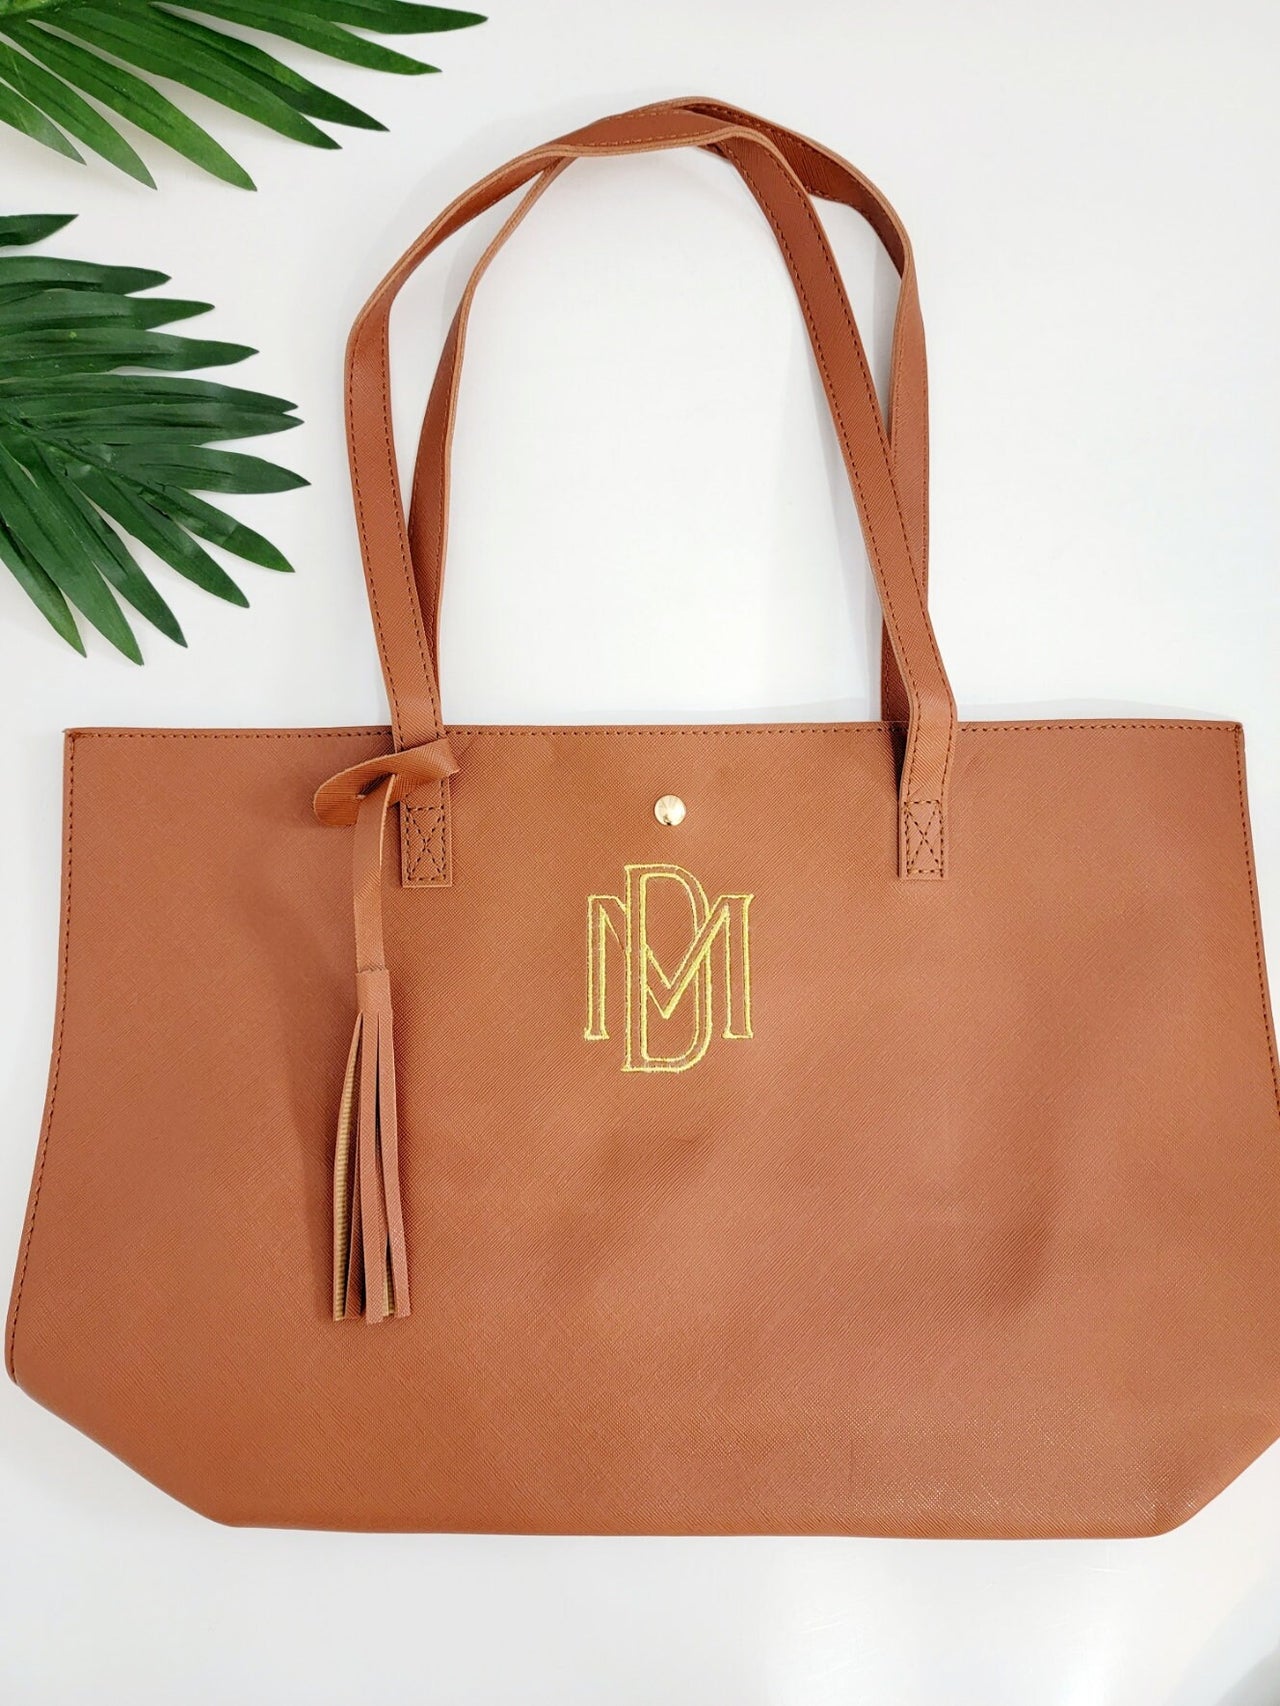 Brown Monogrammed Tote Bag For Women - Personalized Work Tote Bag - Travel Tote Bag - Bridesmaid Gift - Tote Bag Aesthetic